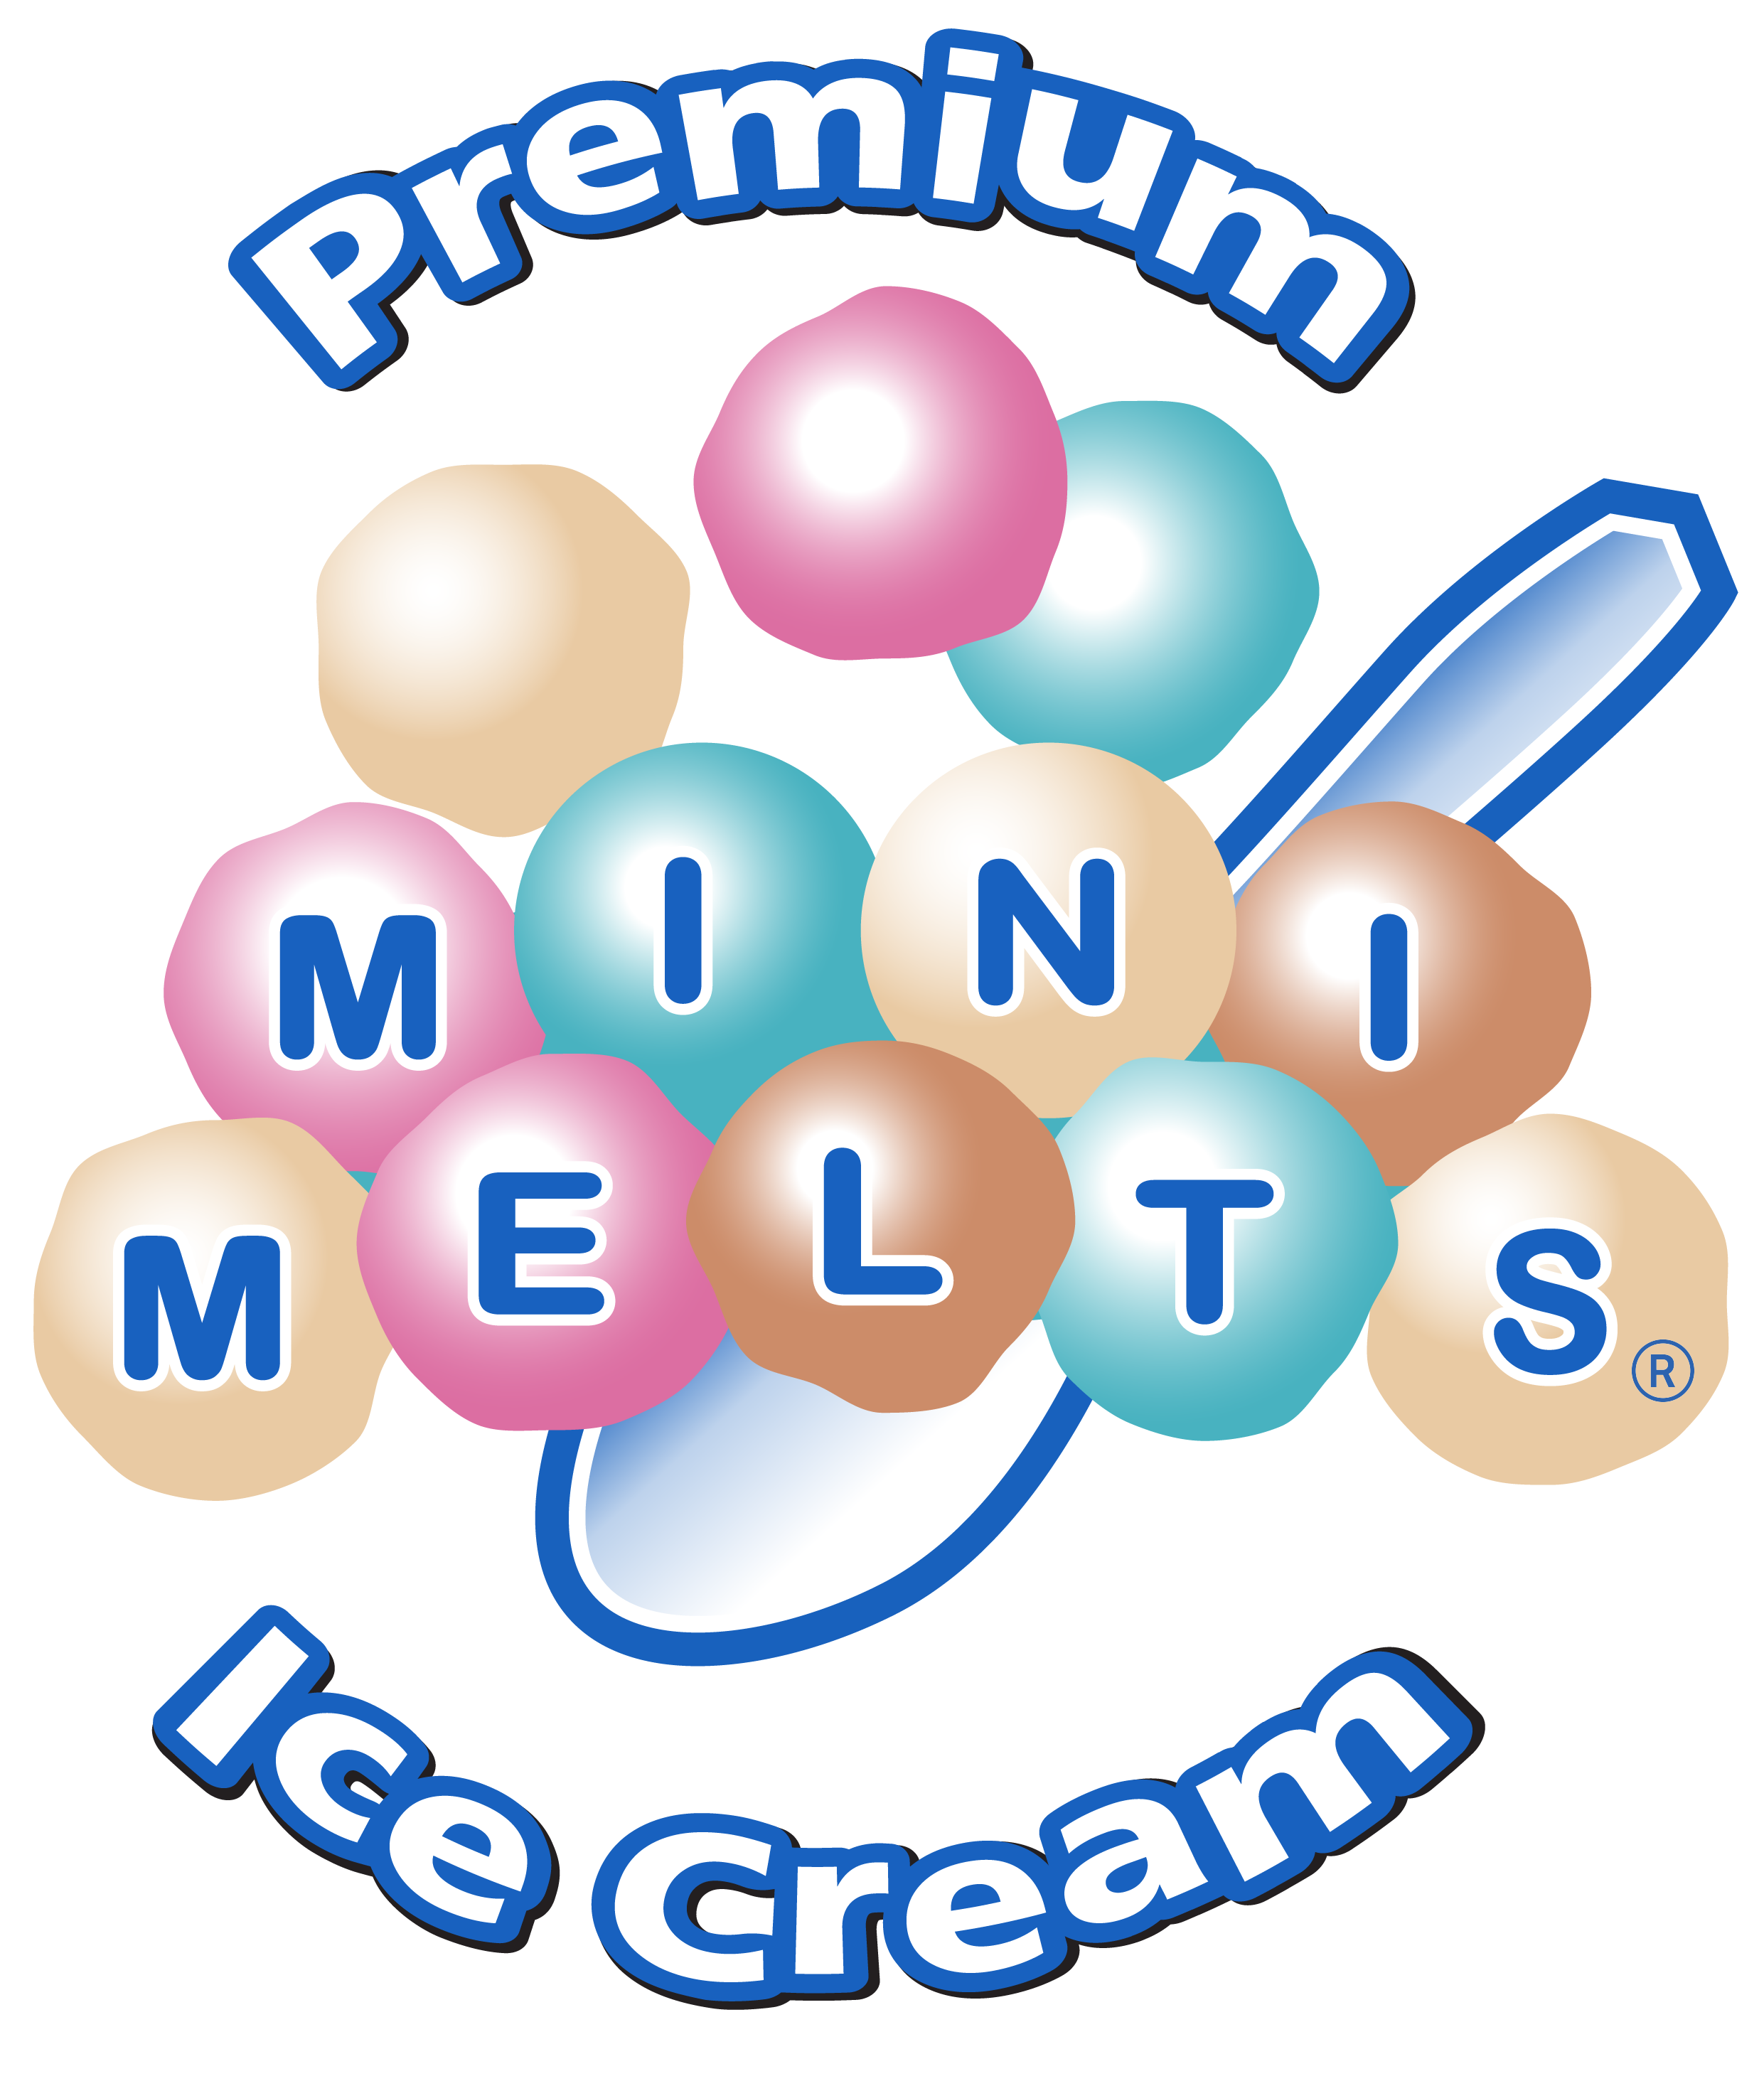 MINI MELTS ICE CREAM